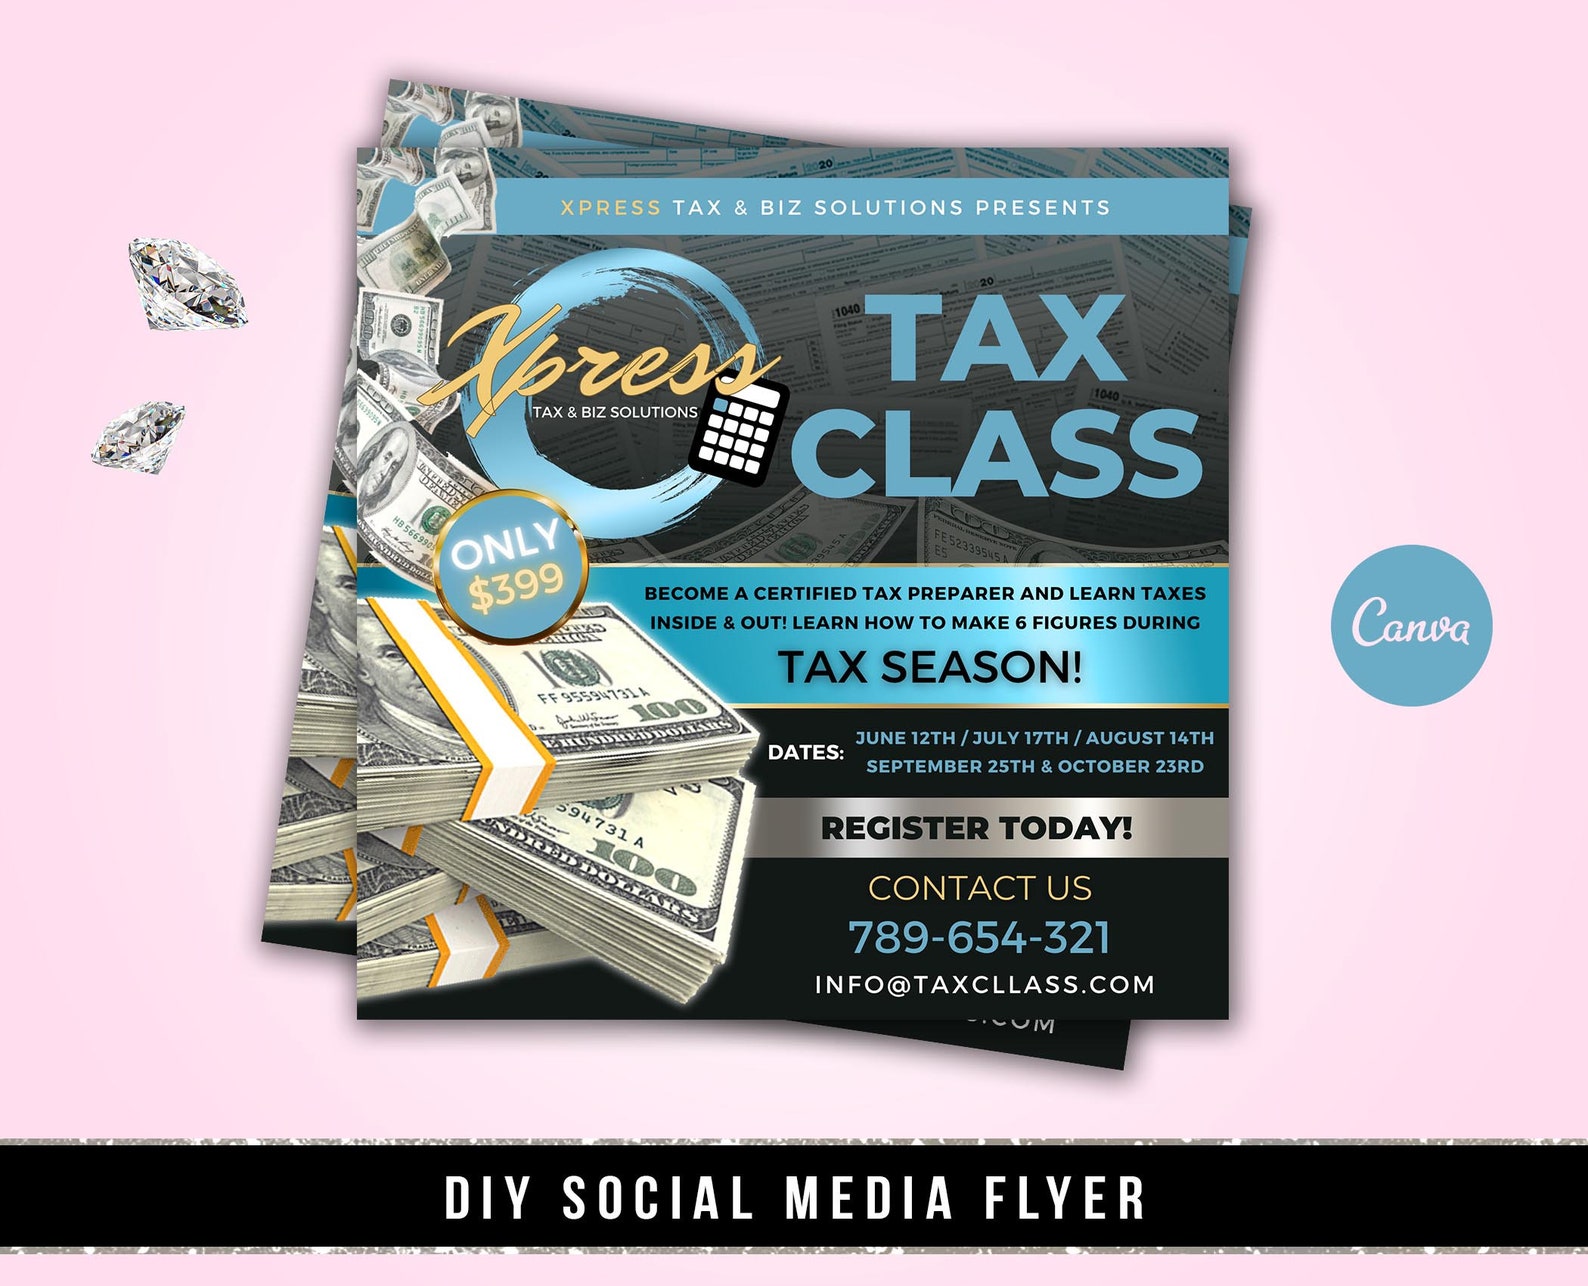 diy-tax-class-flyer-tax-services-tax-preparation-flyer-tax-etsy